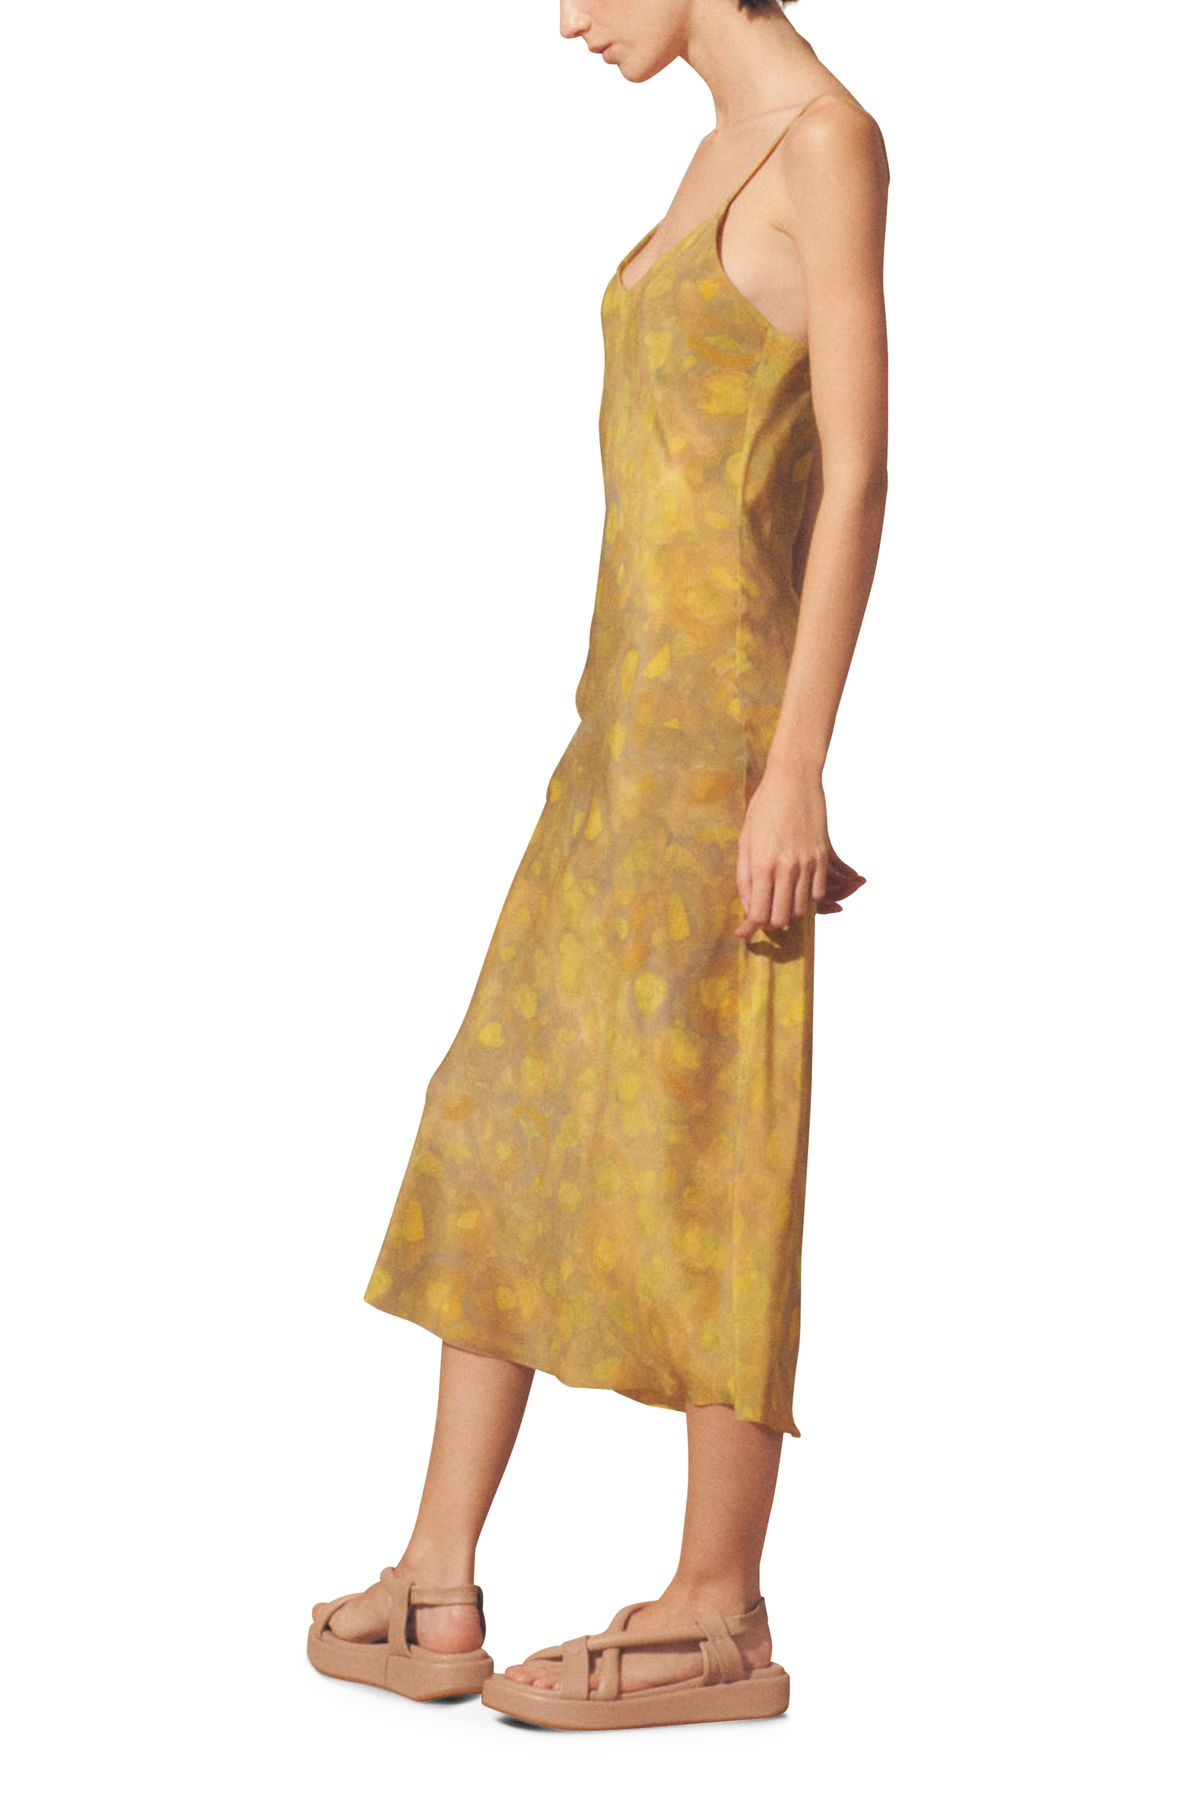 Cortana Lili Silk Dress